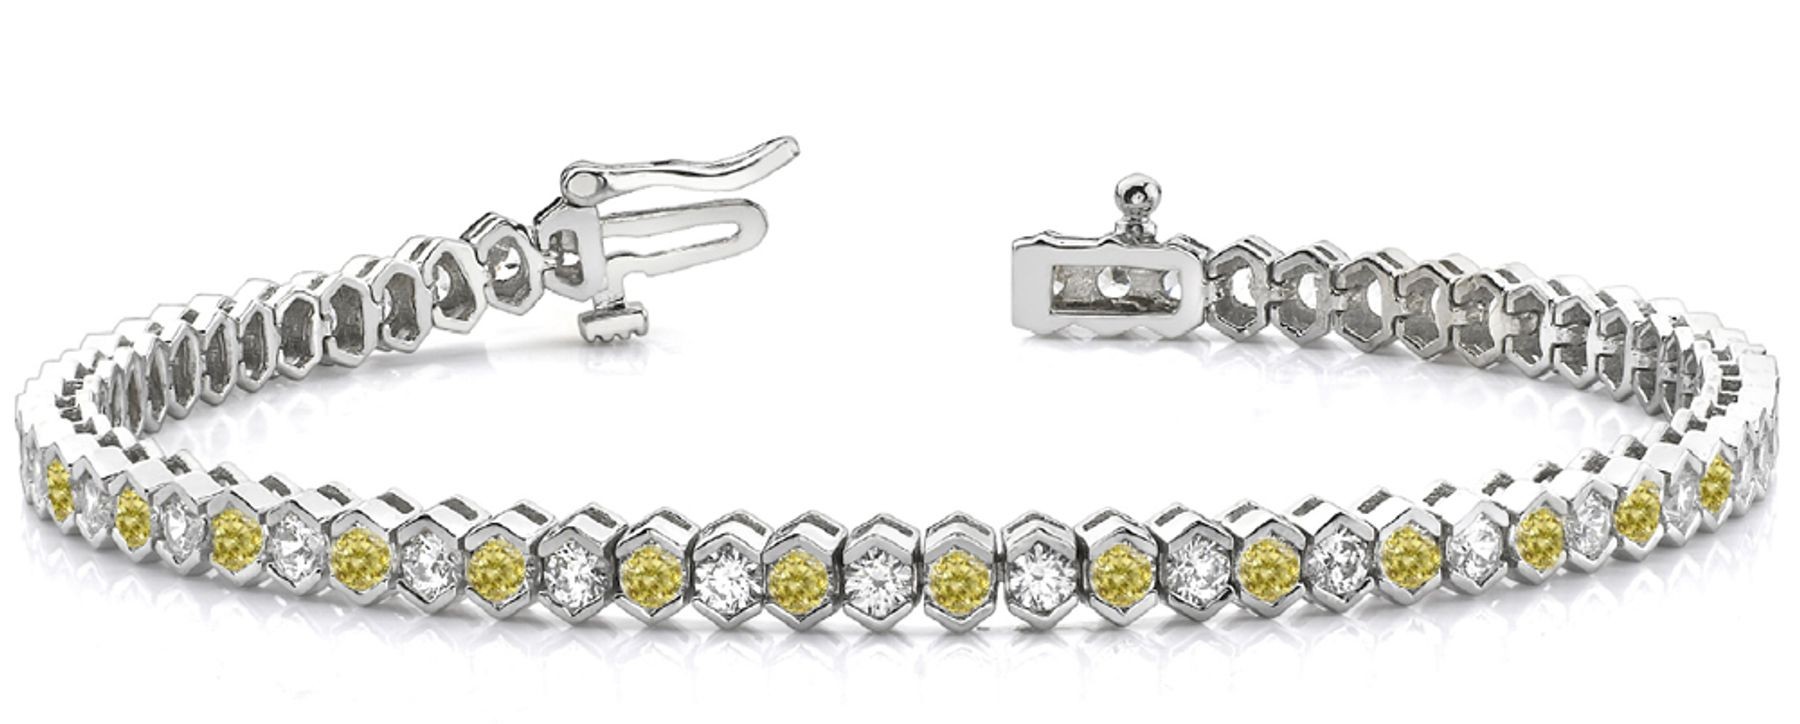 Colored Diamond Bracelets: Yellow Diamonds - Yellow Colored Diamond Bracelets